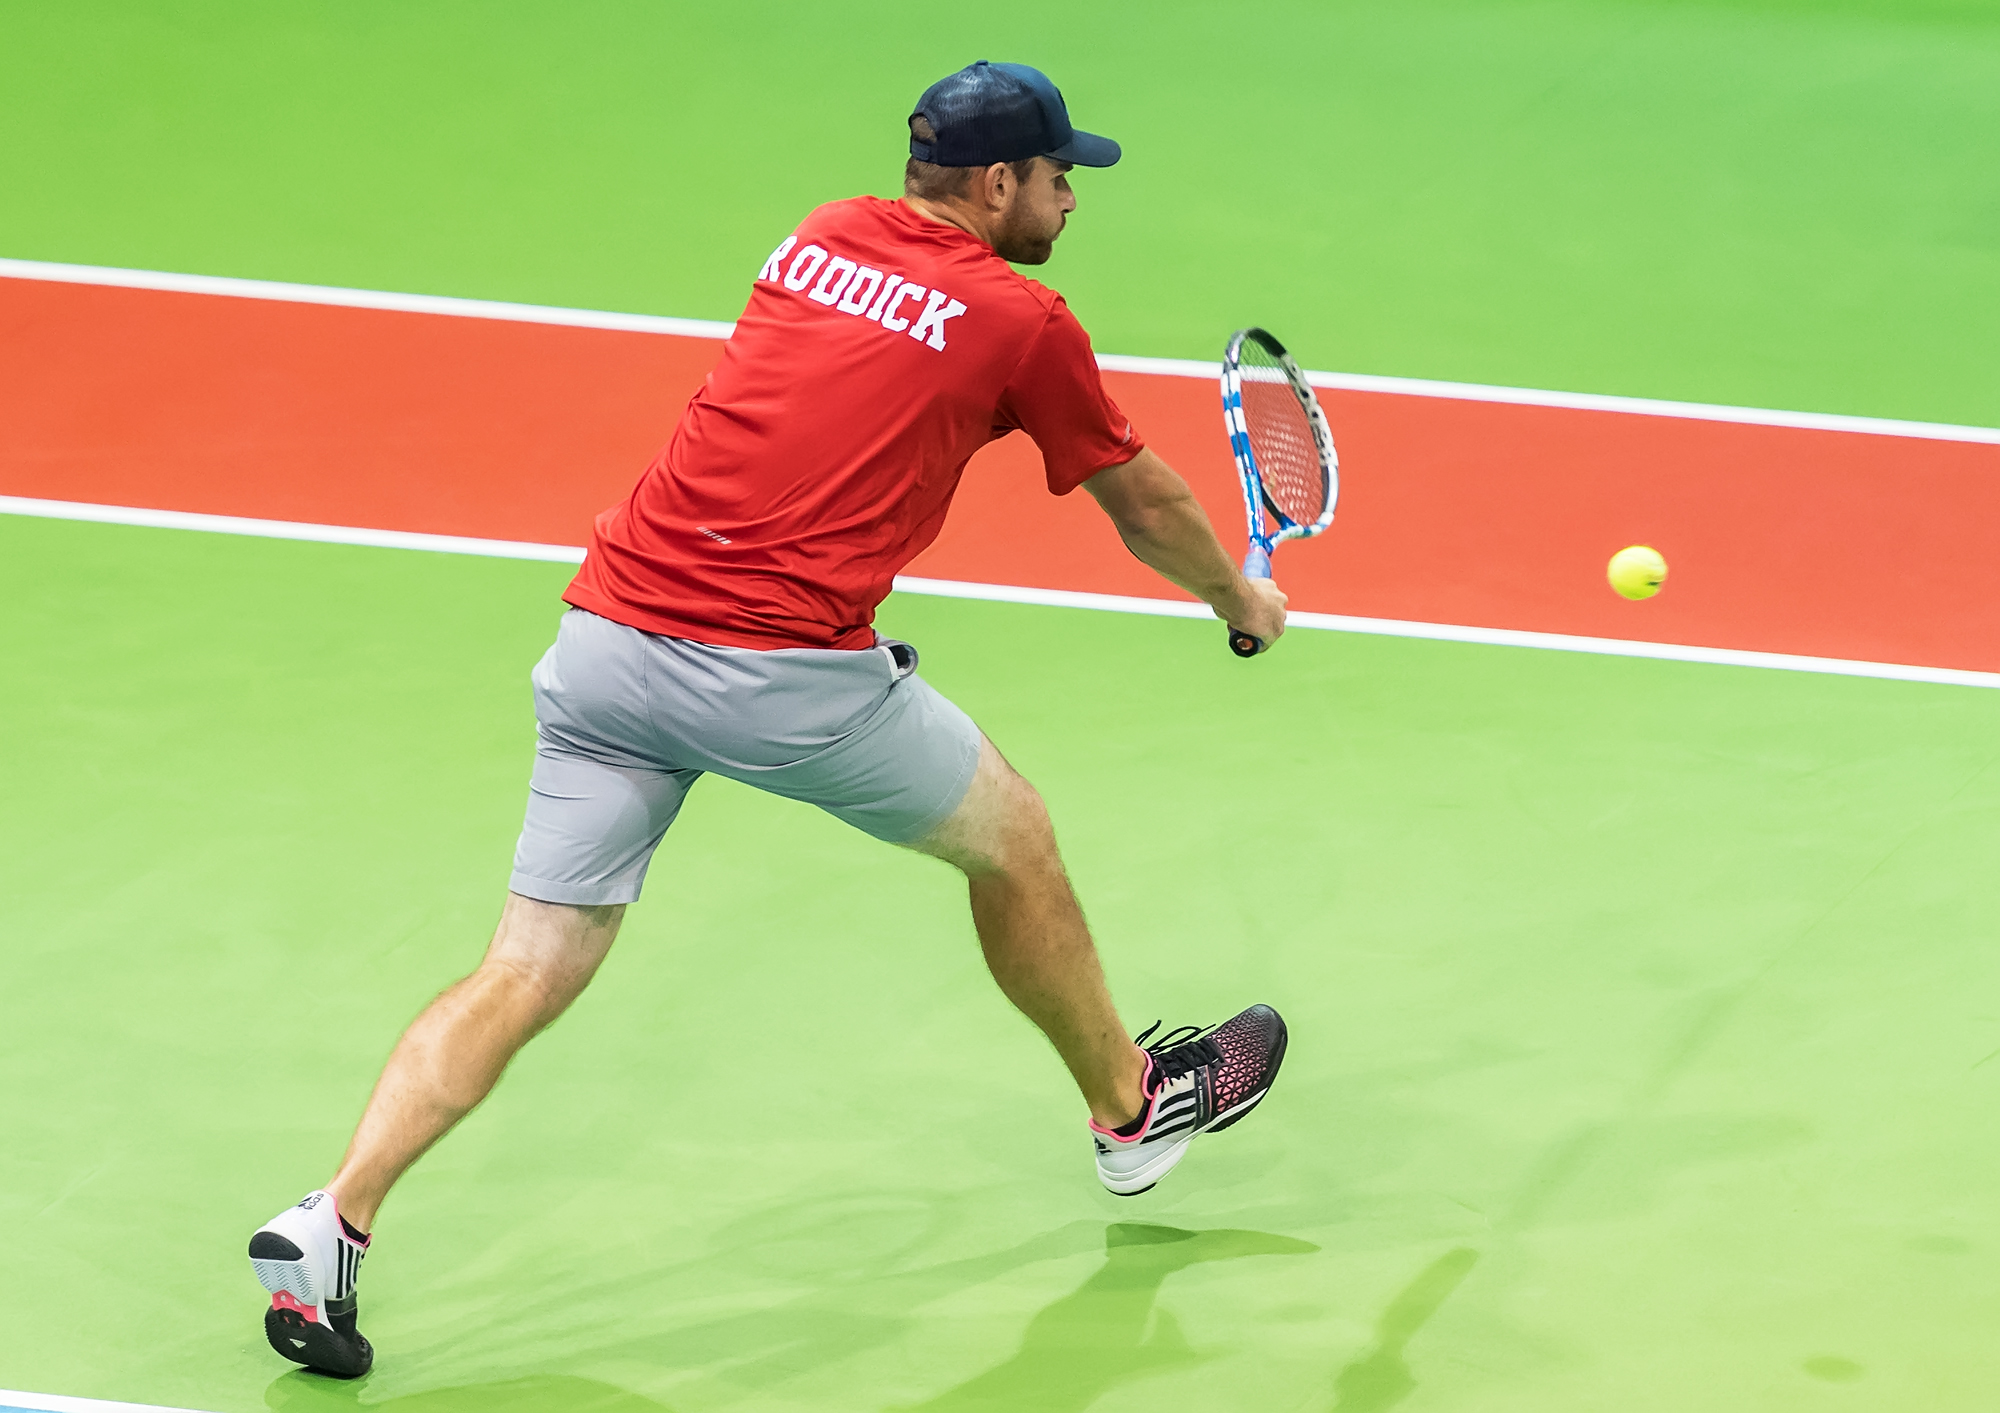 Tennis player Andy Roddick participated in the 2017 Mylan World Team Tennis New York Empire vs Philadelphia Freedoms match in 2017.